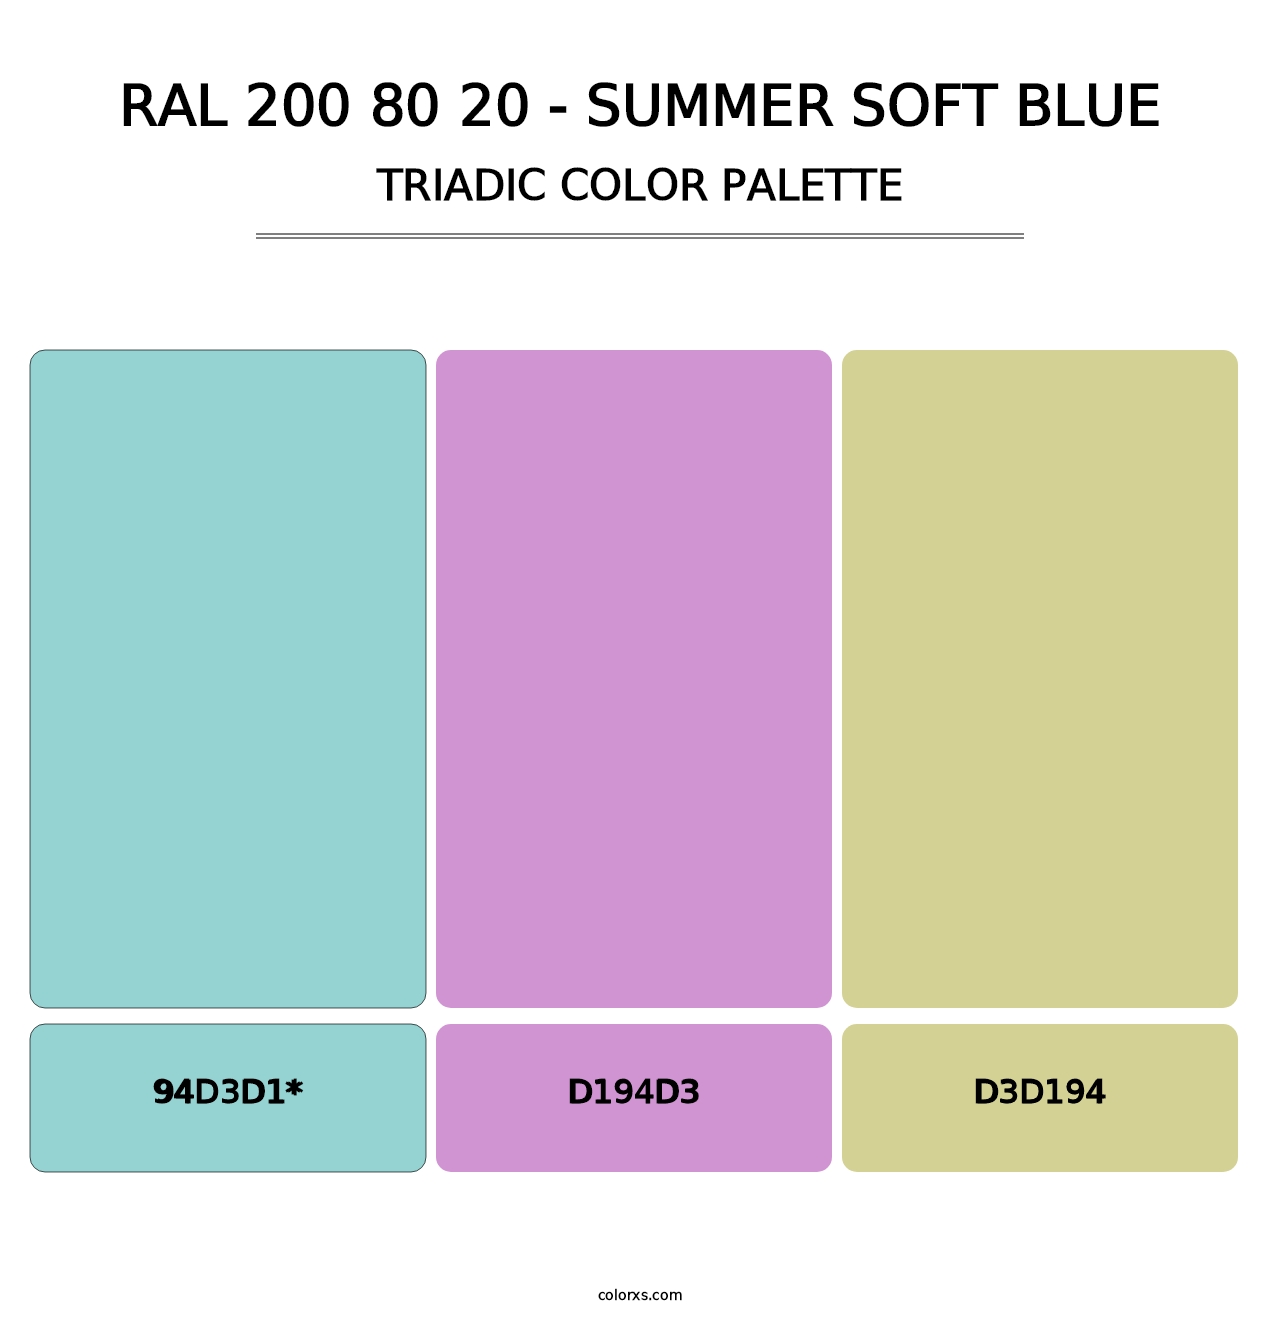 RAL 200 80 20 - Summer Soft Blue - Triadic Color Palette